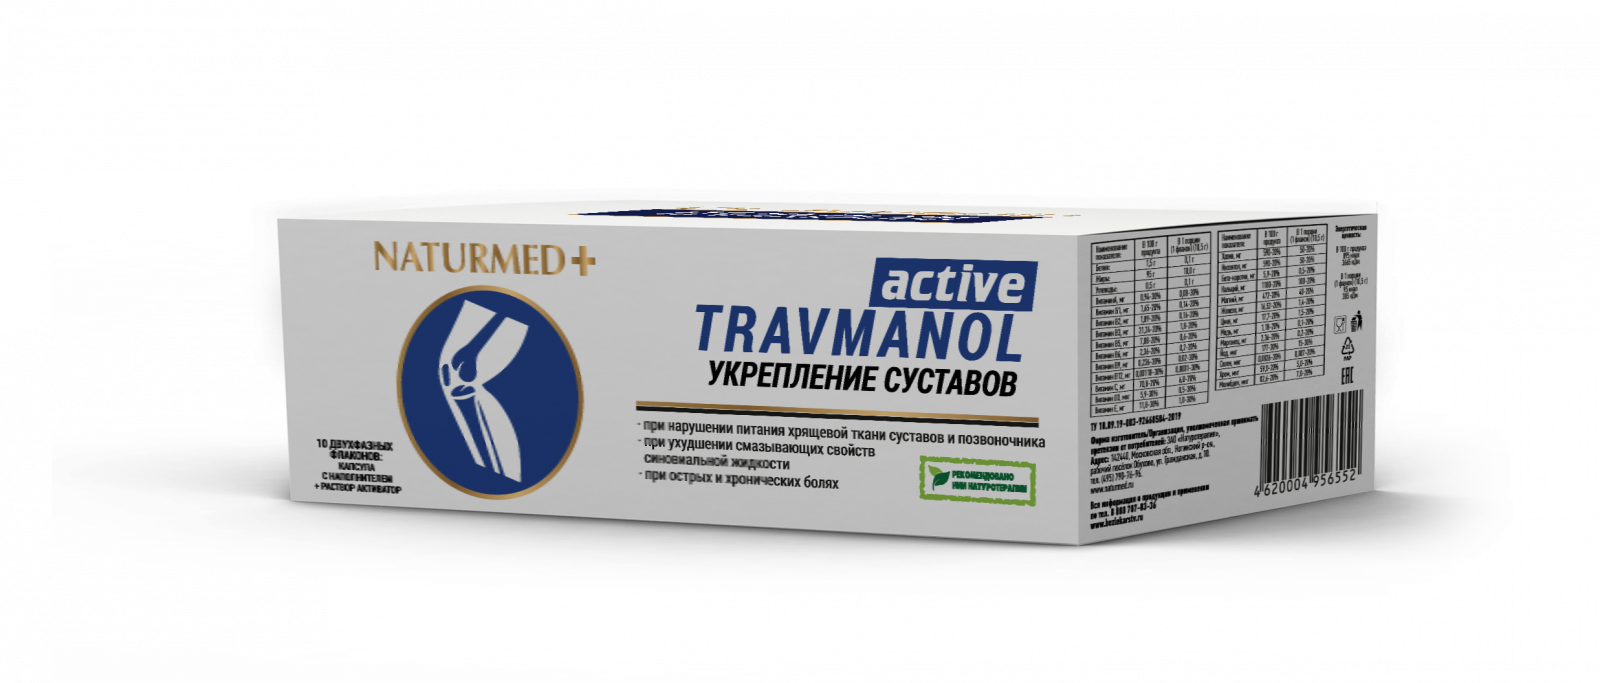  «Active nutrition Травманол актив Naturmed 10 флаконов» - Капсулы в Активаторе